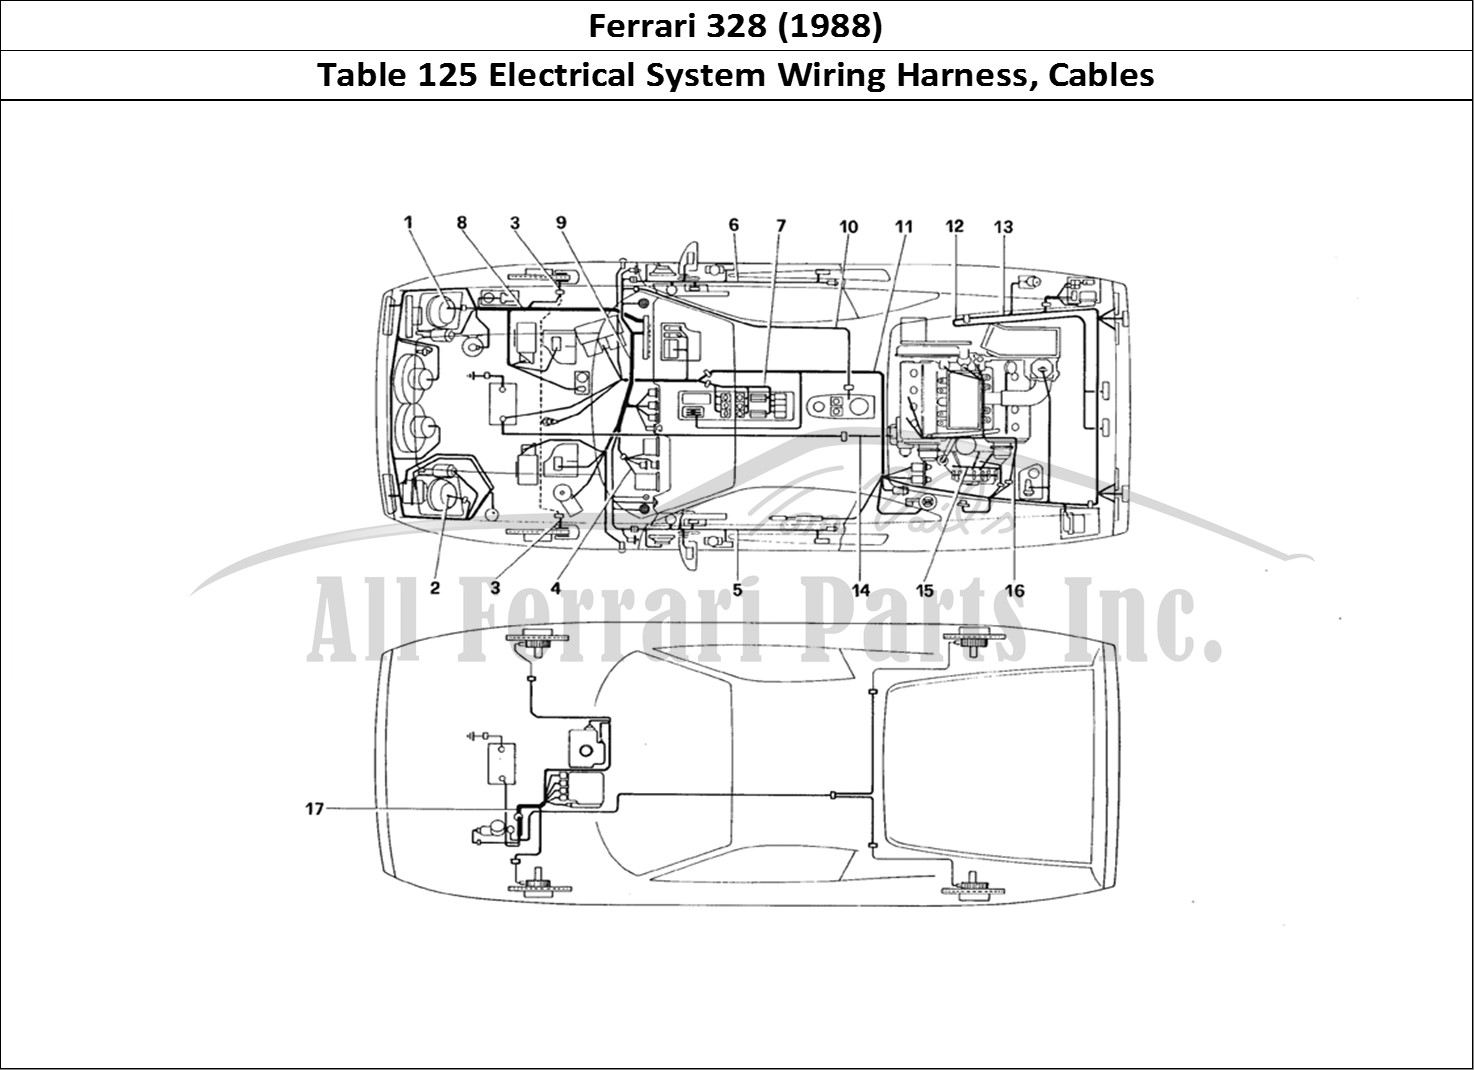 Ferrari Parts Ferrari 328 (1988) Page 125 Electrical System - Cable